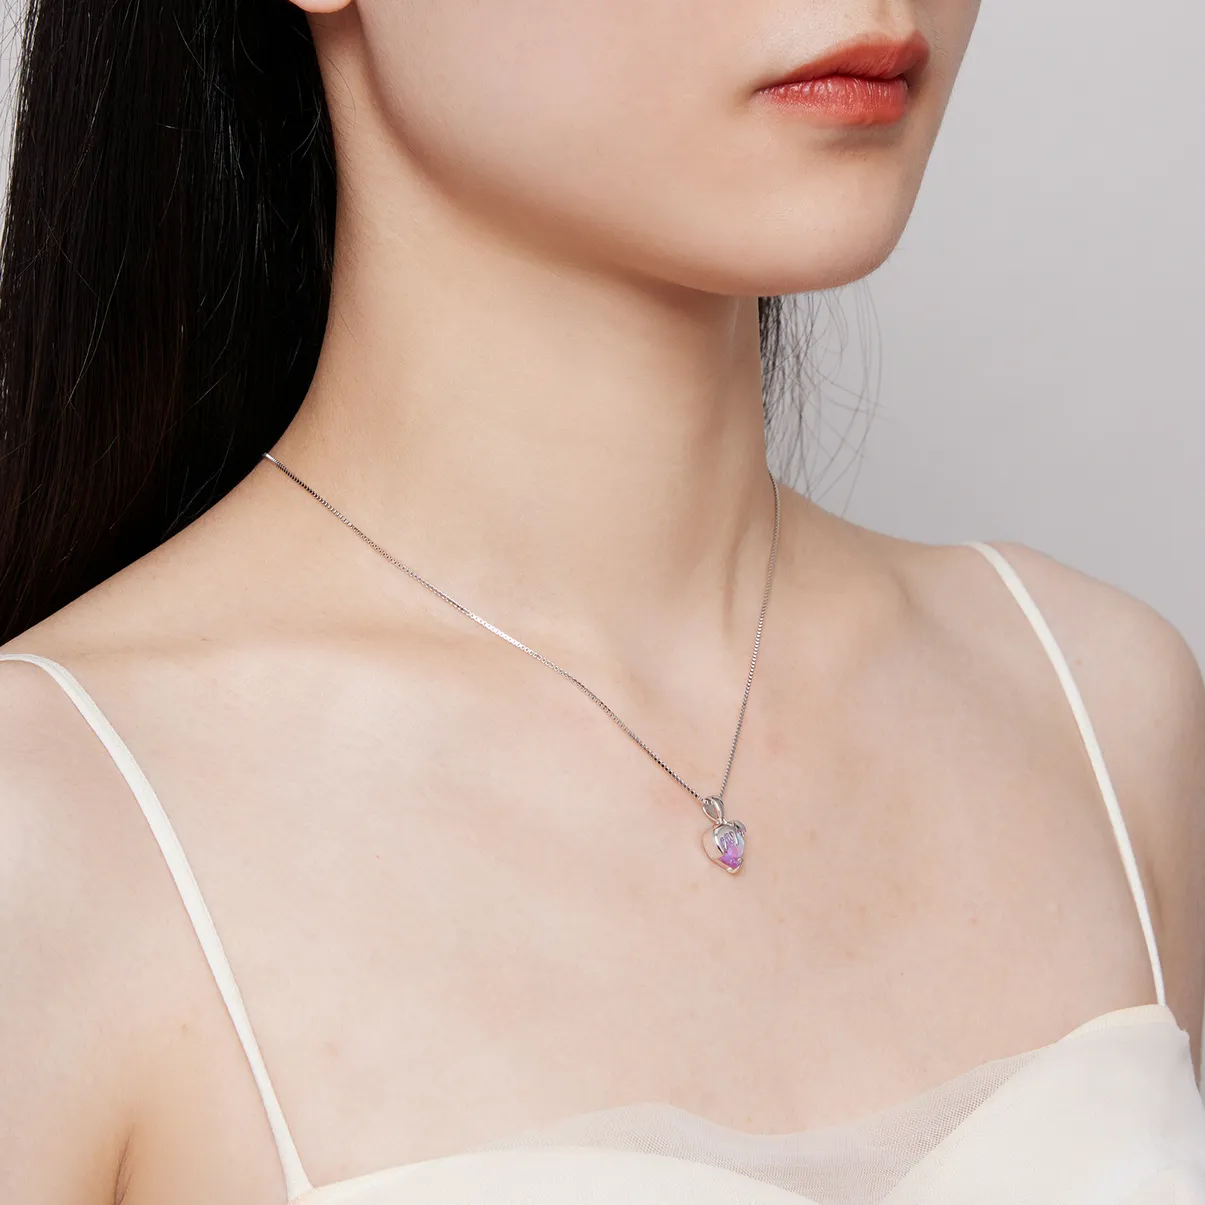 Pandora Style Melting Heart Necklace - BSN322